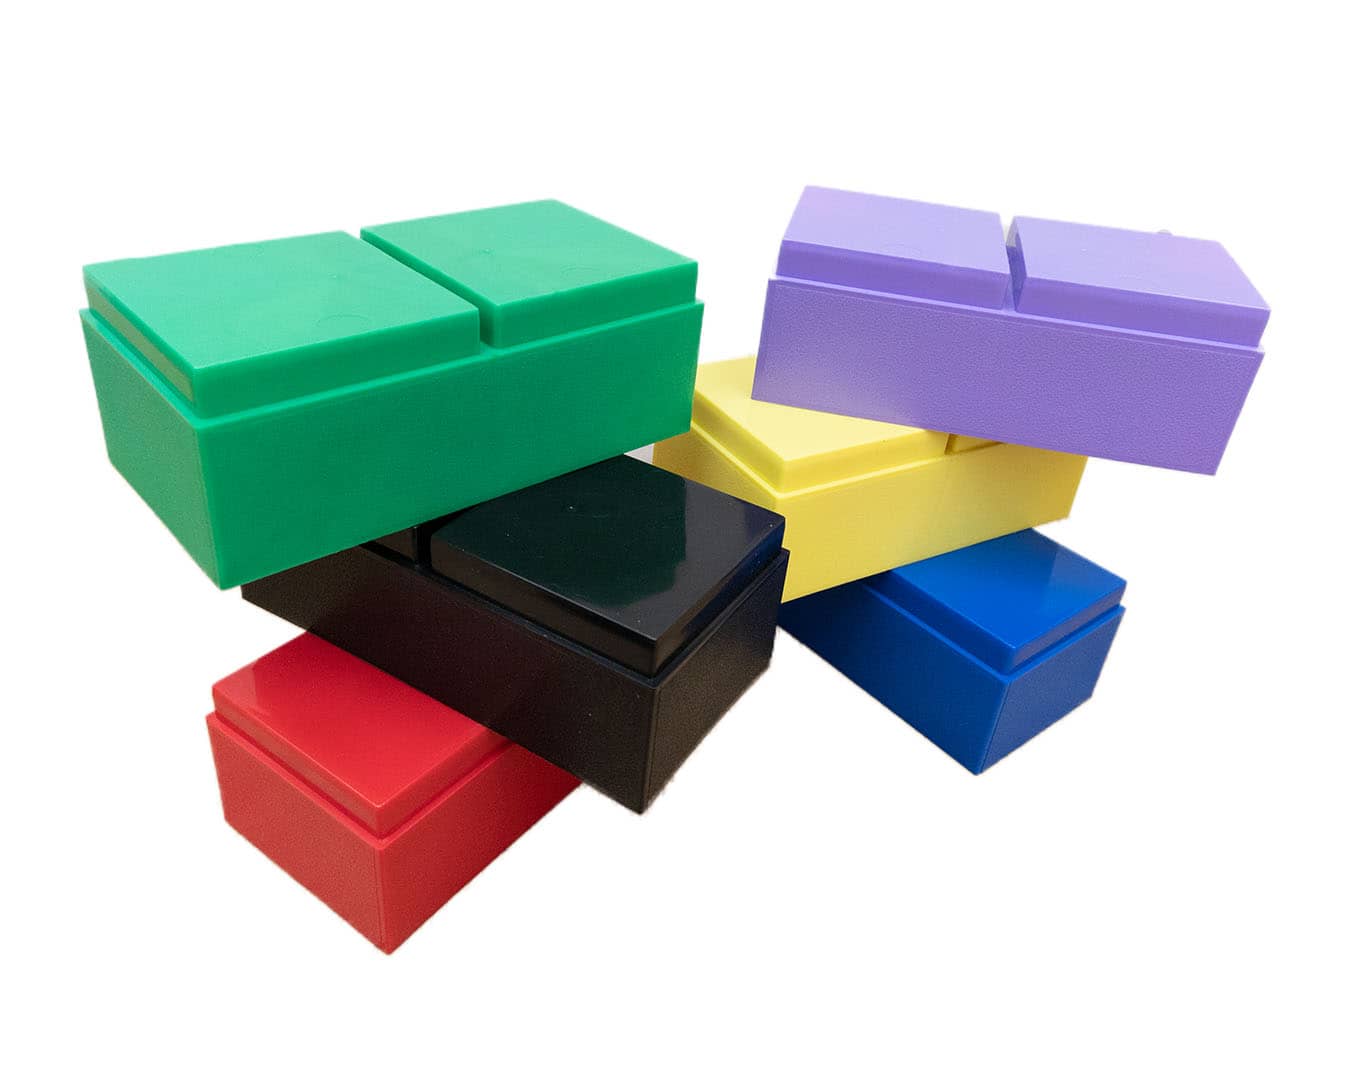 Rexun Classic Big Bricks Toy for Toddlers Packed by Interlocking Box 128Pcs Building Blocks Set 